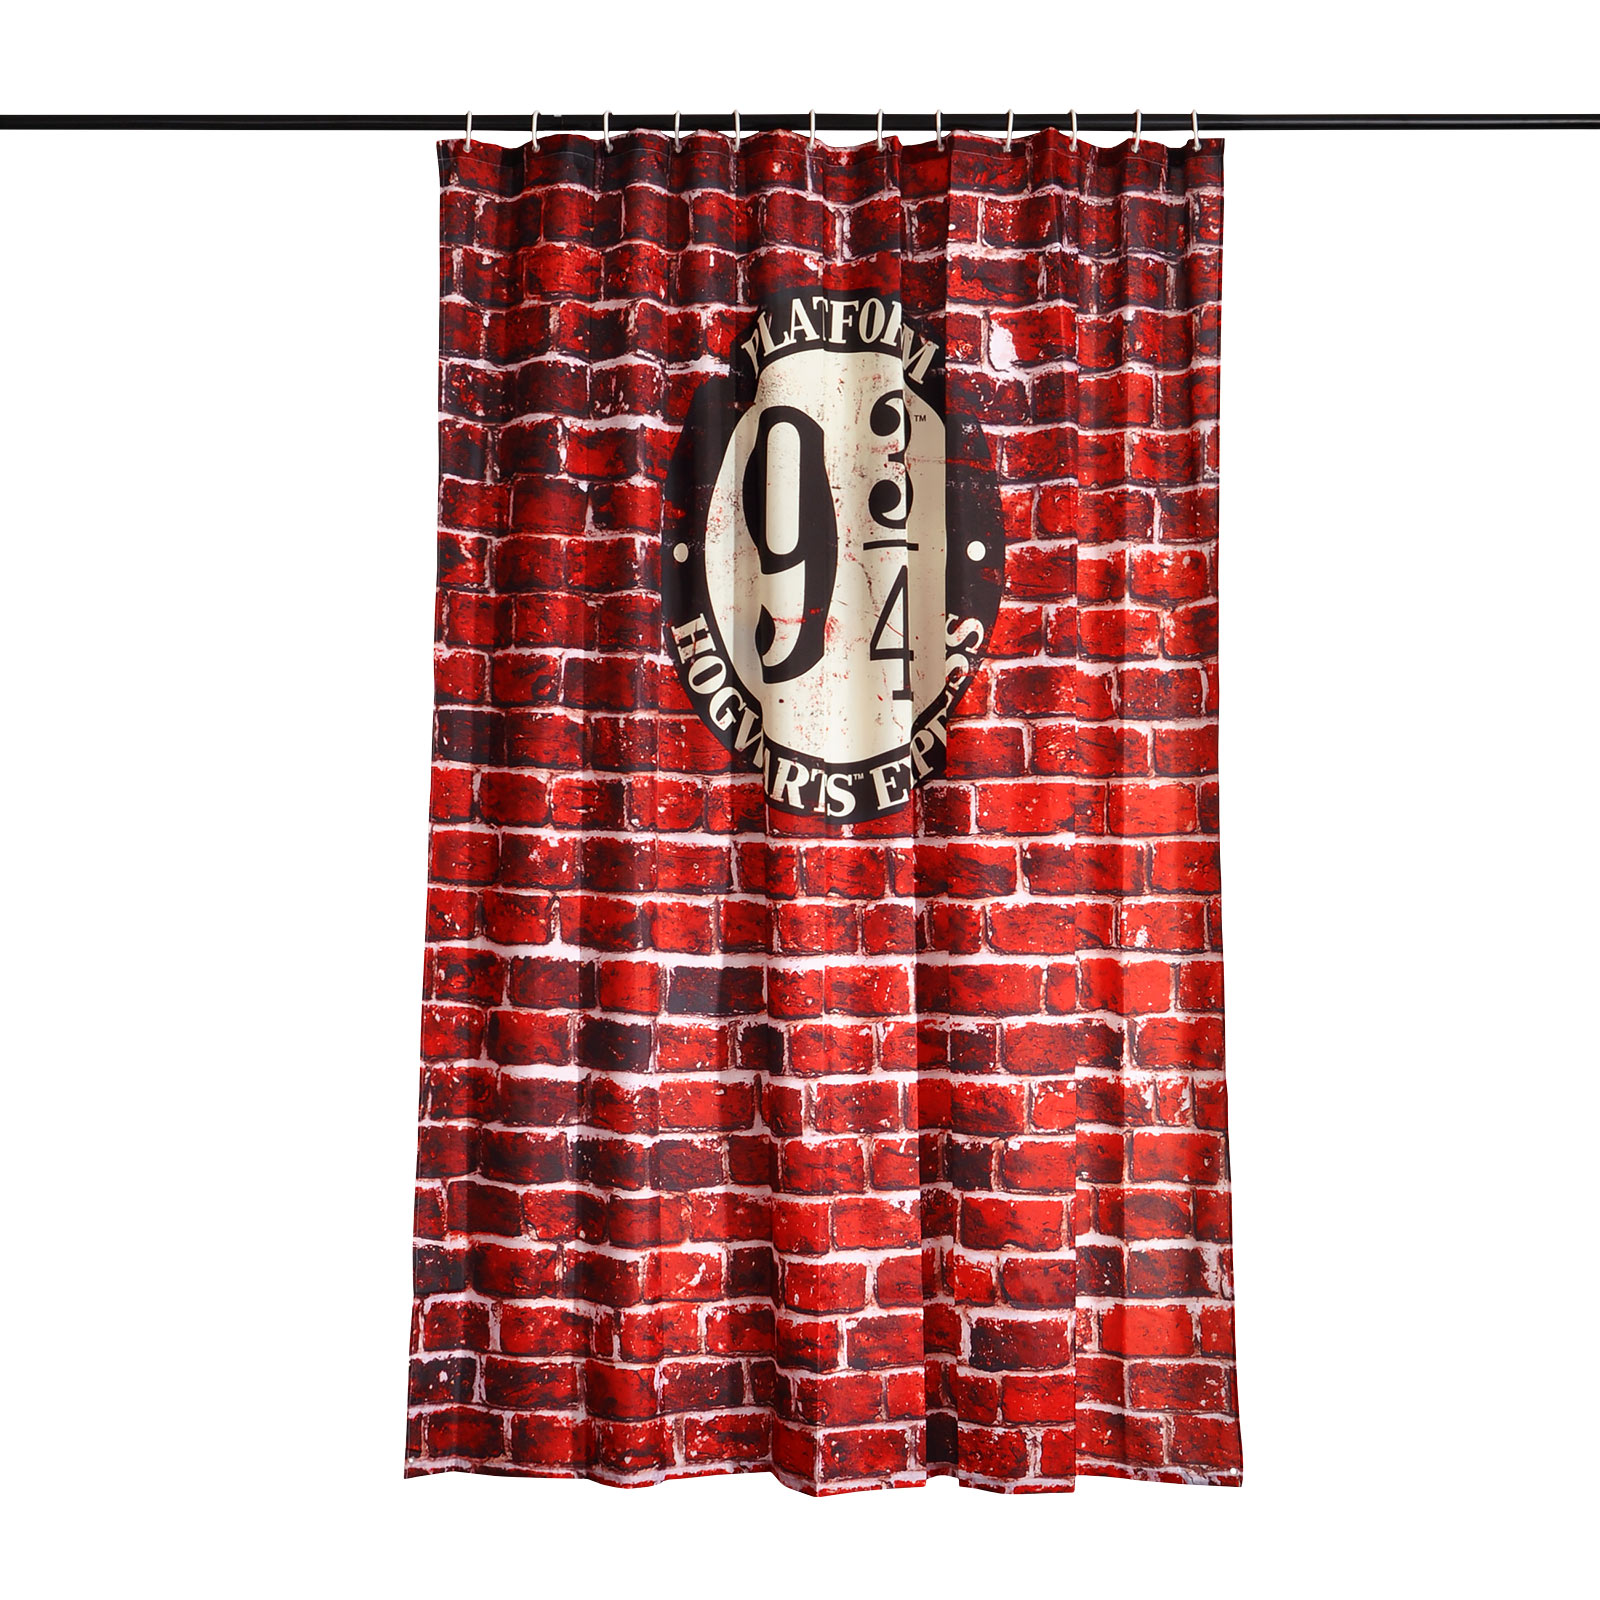 Harry Potter - Platform 9 3/4 Shower Curtain